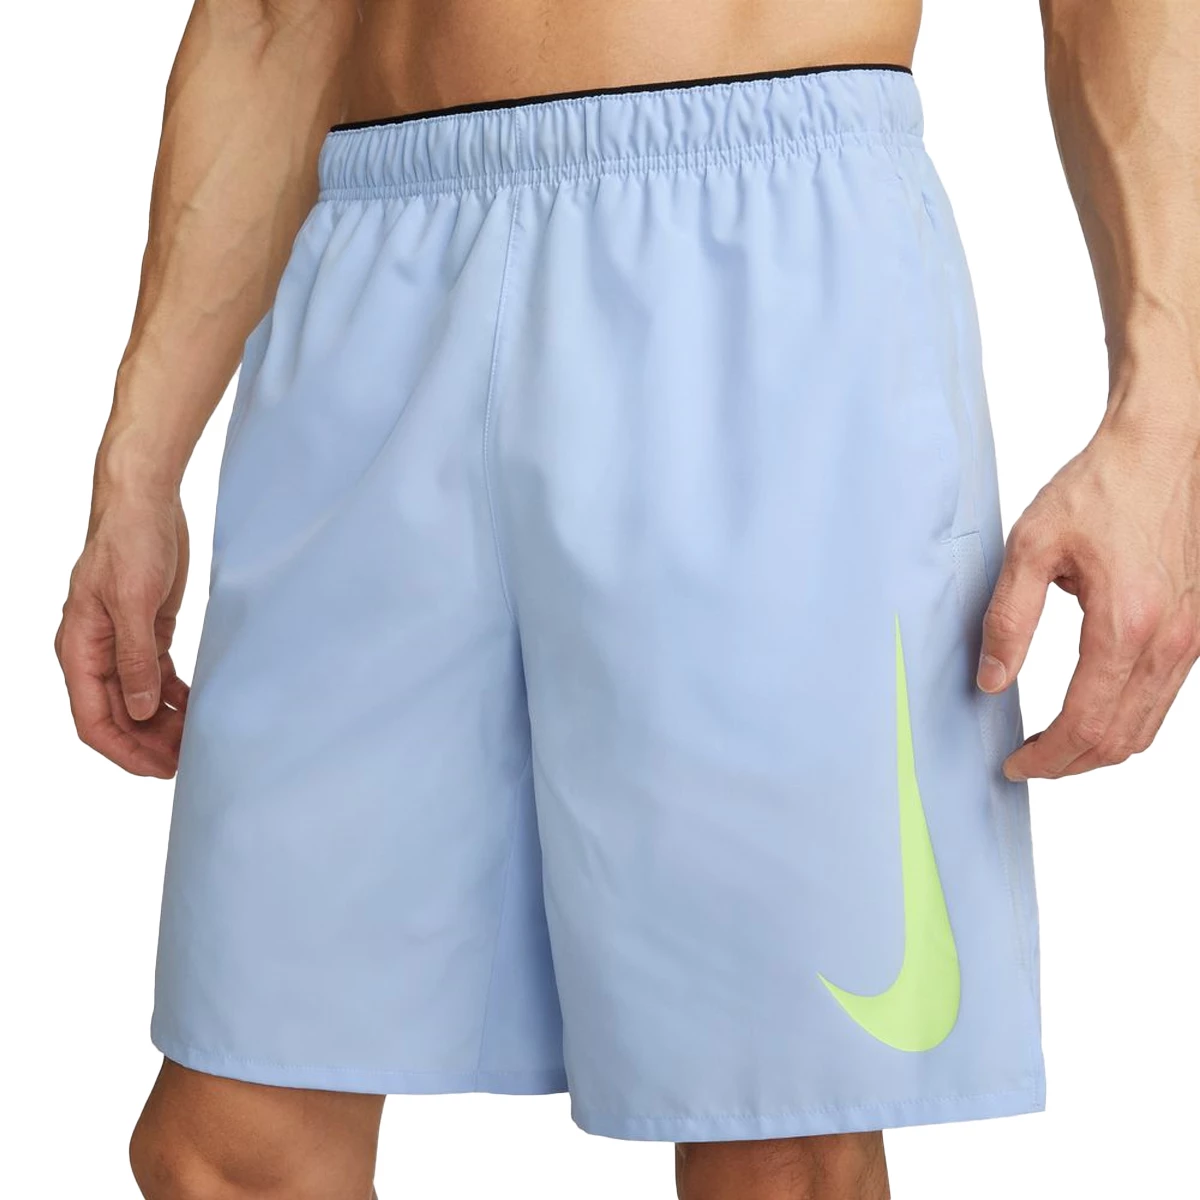 Nike Dri-fit challenger 9 unlined short